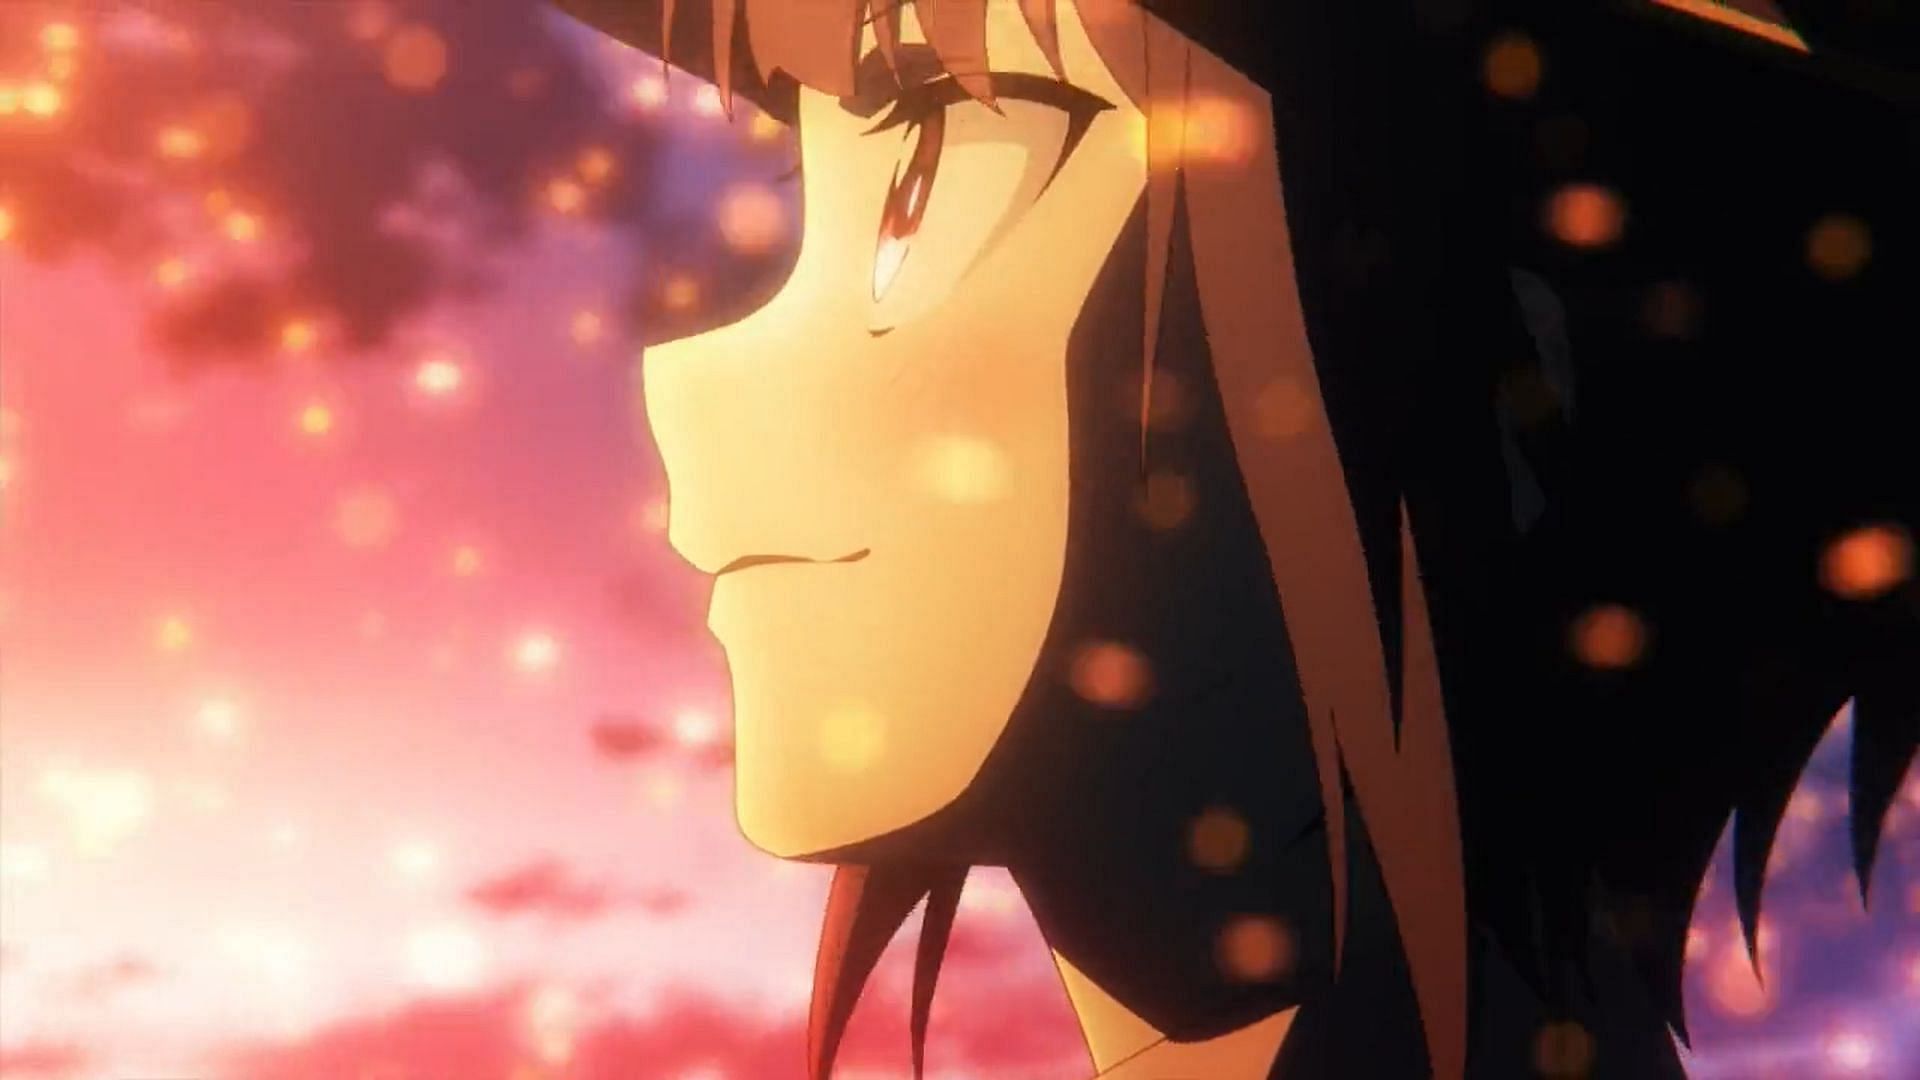 Megumin as seen in KonoSuba: An Explosion on This Wonderful World! episode 5 (Image via Studio Deen)